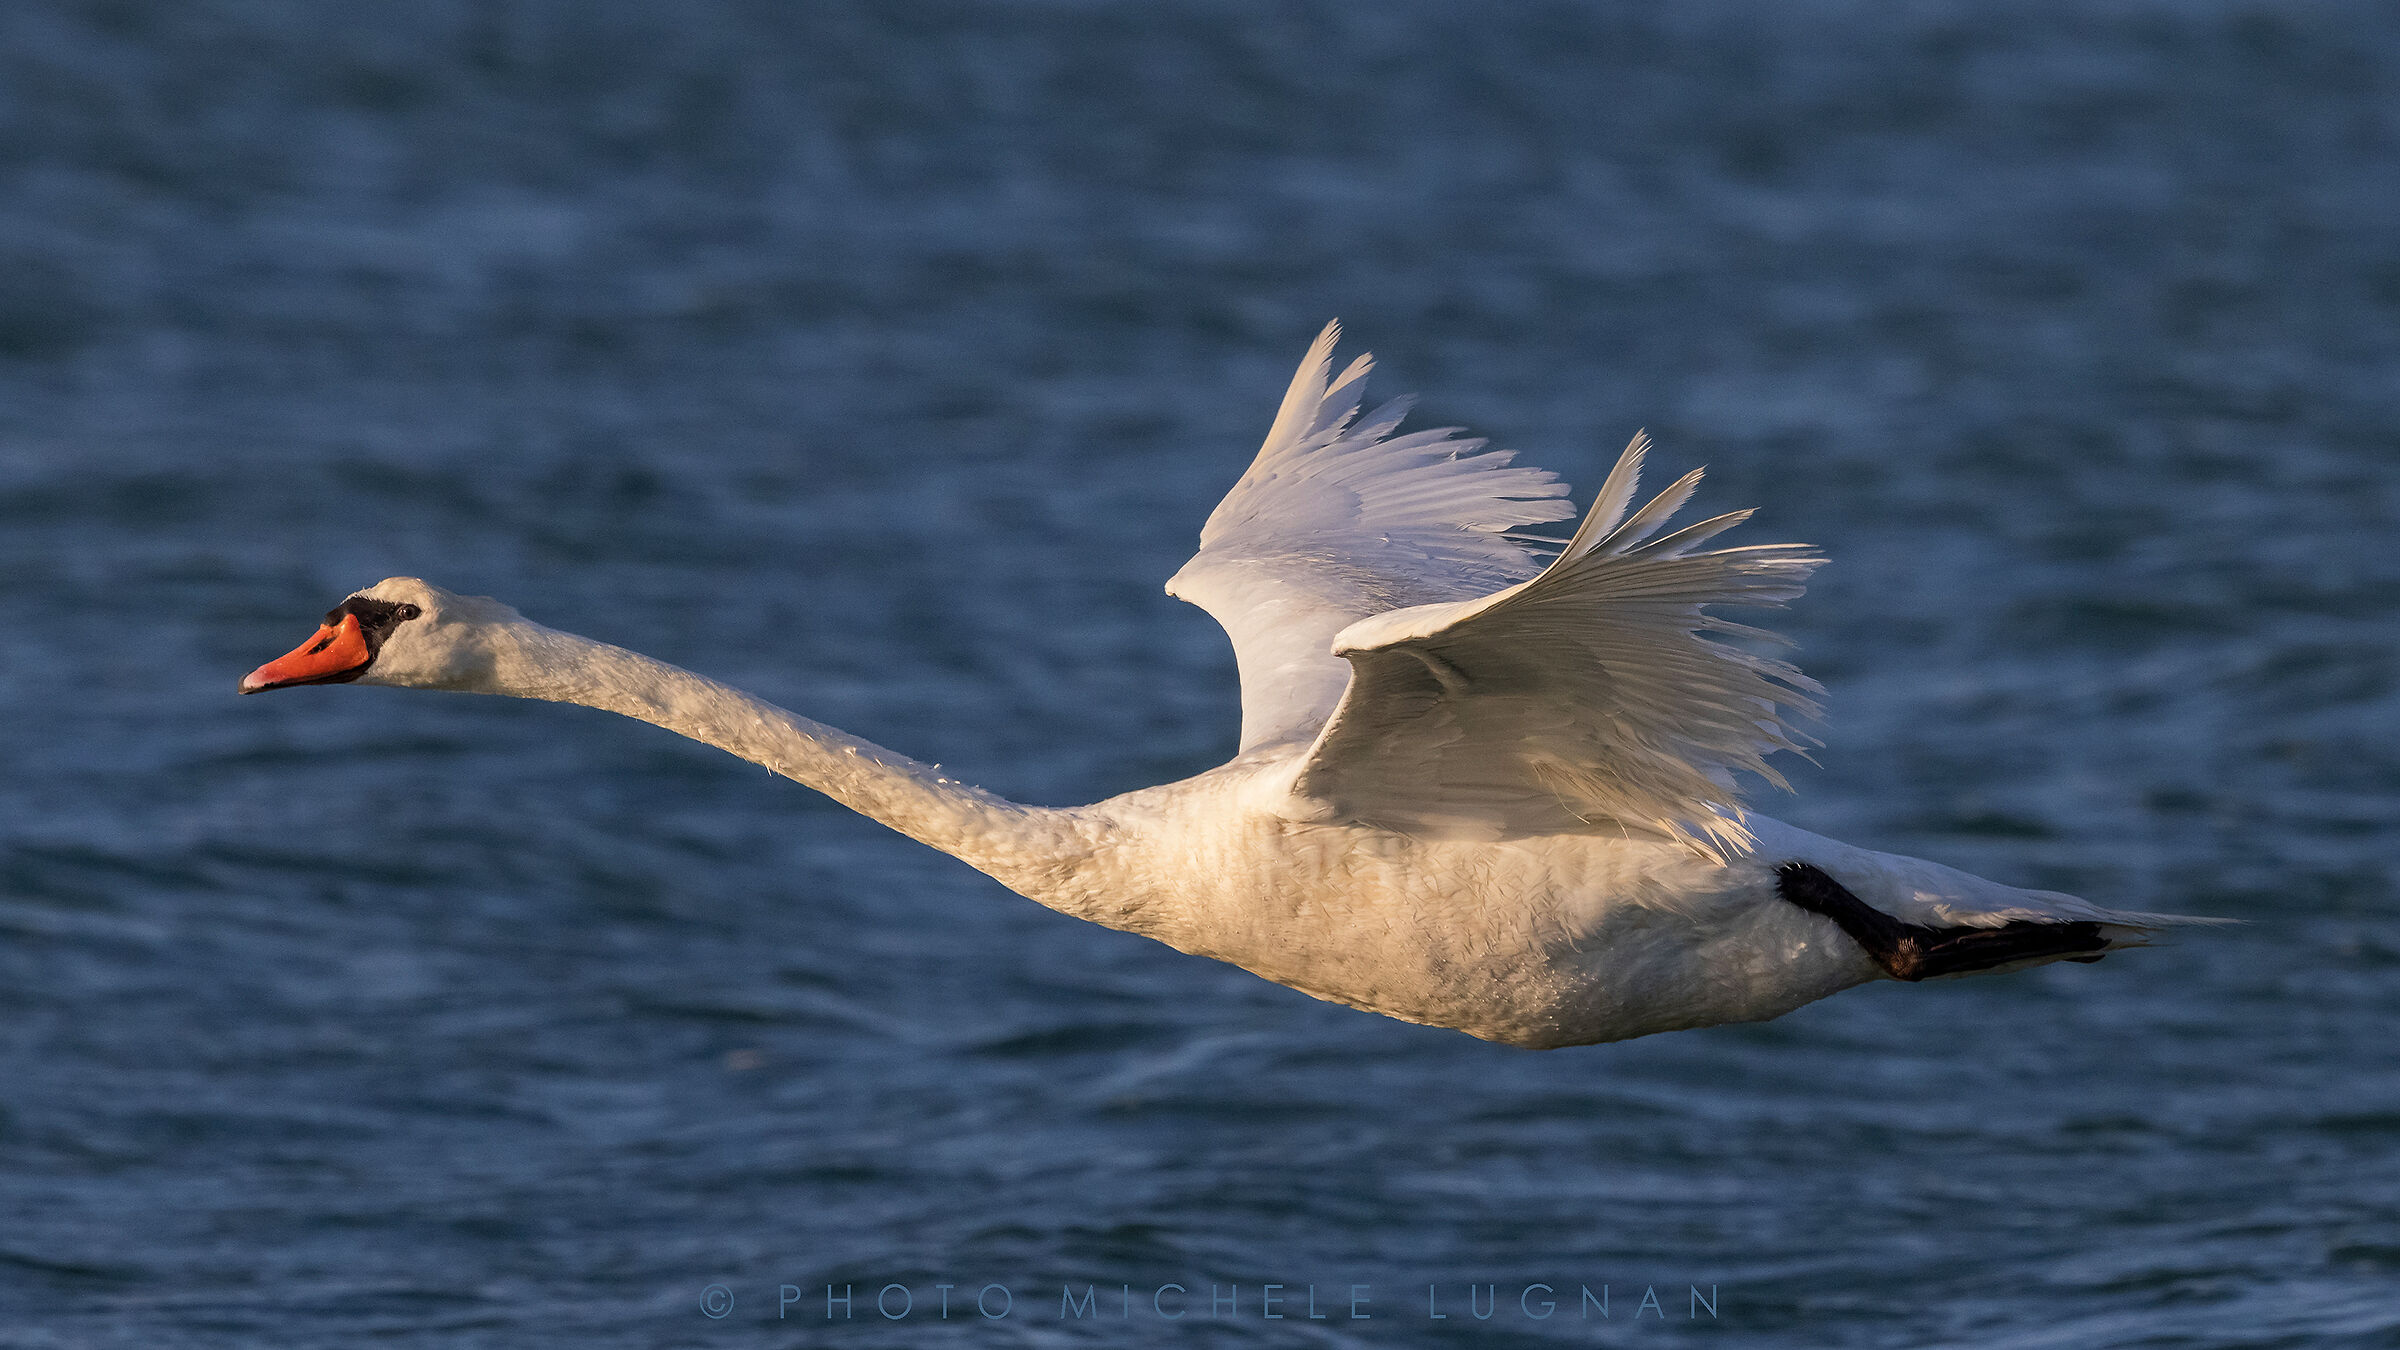 Cygnus olor (volg.it. Royal Swan)...